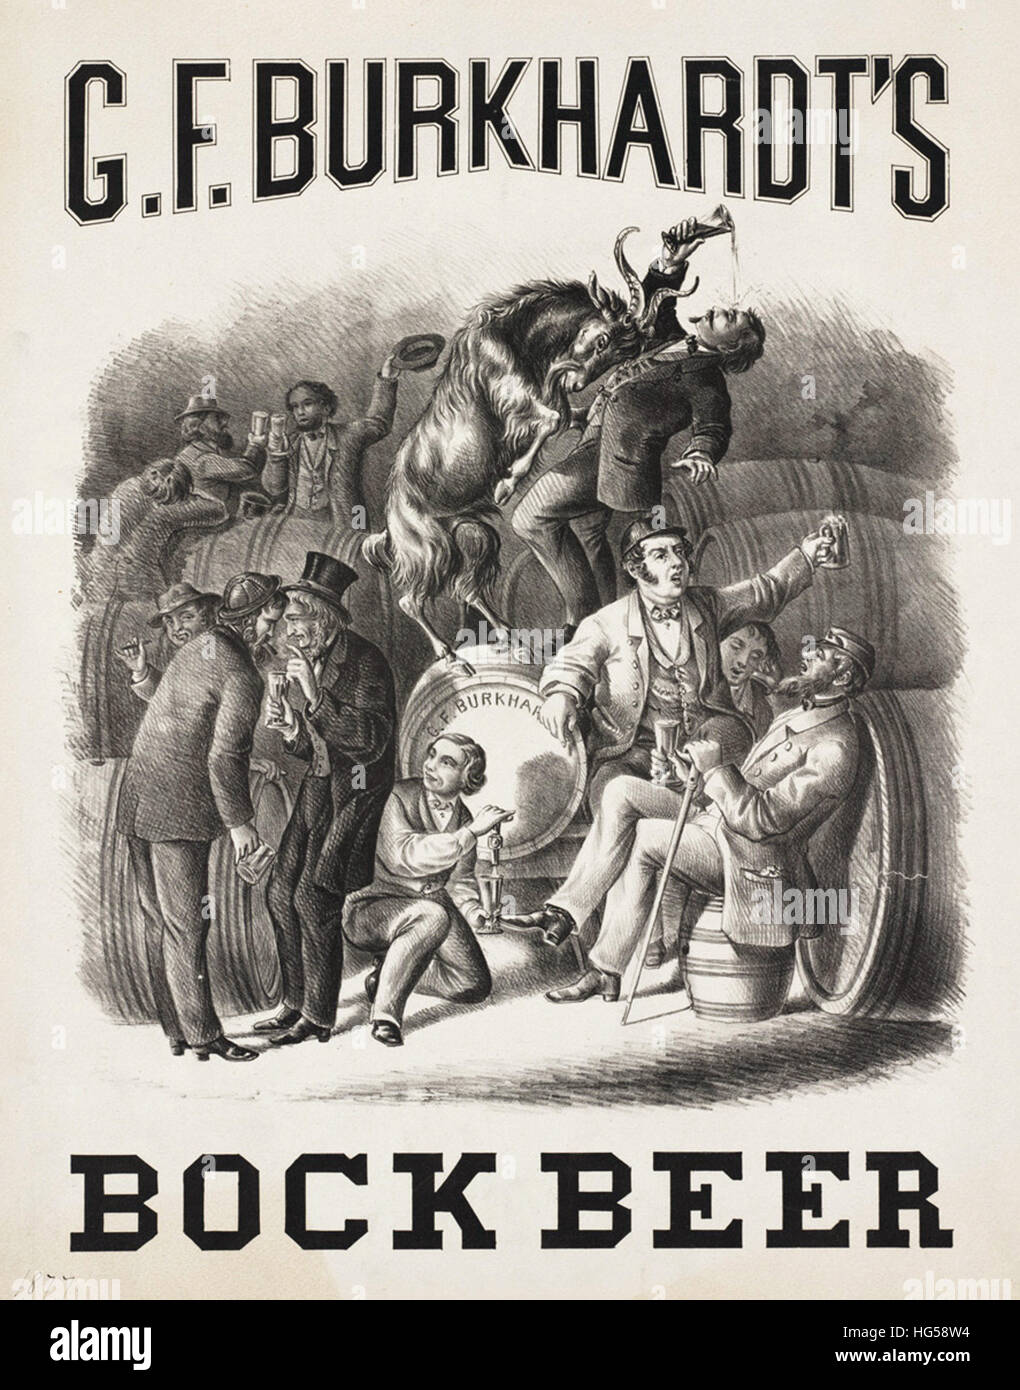 Boston Brauerei Poster - G. F. Burkhardt Bockbier Stockfoto